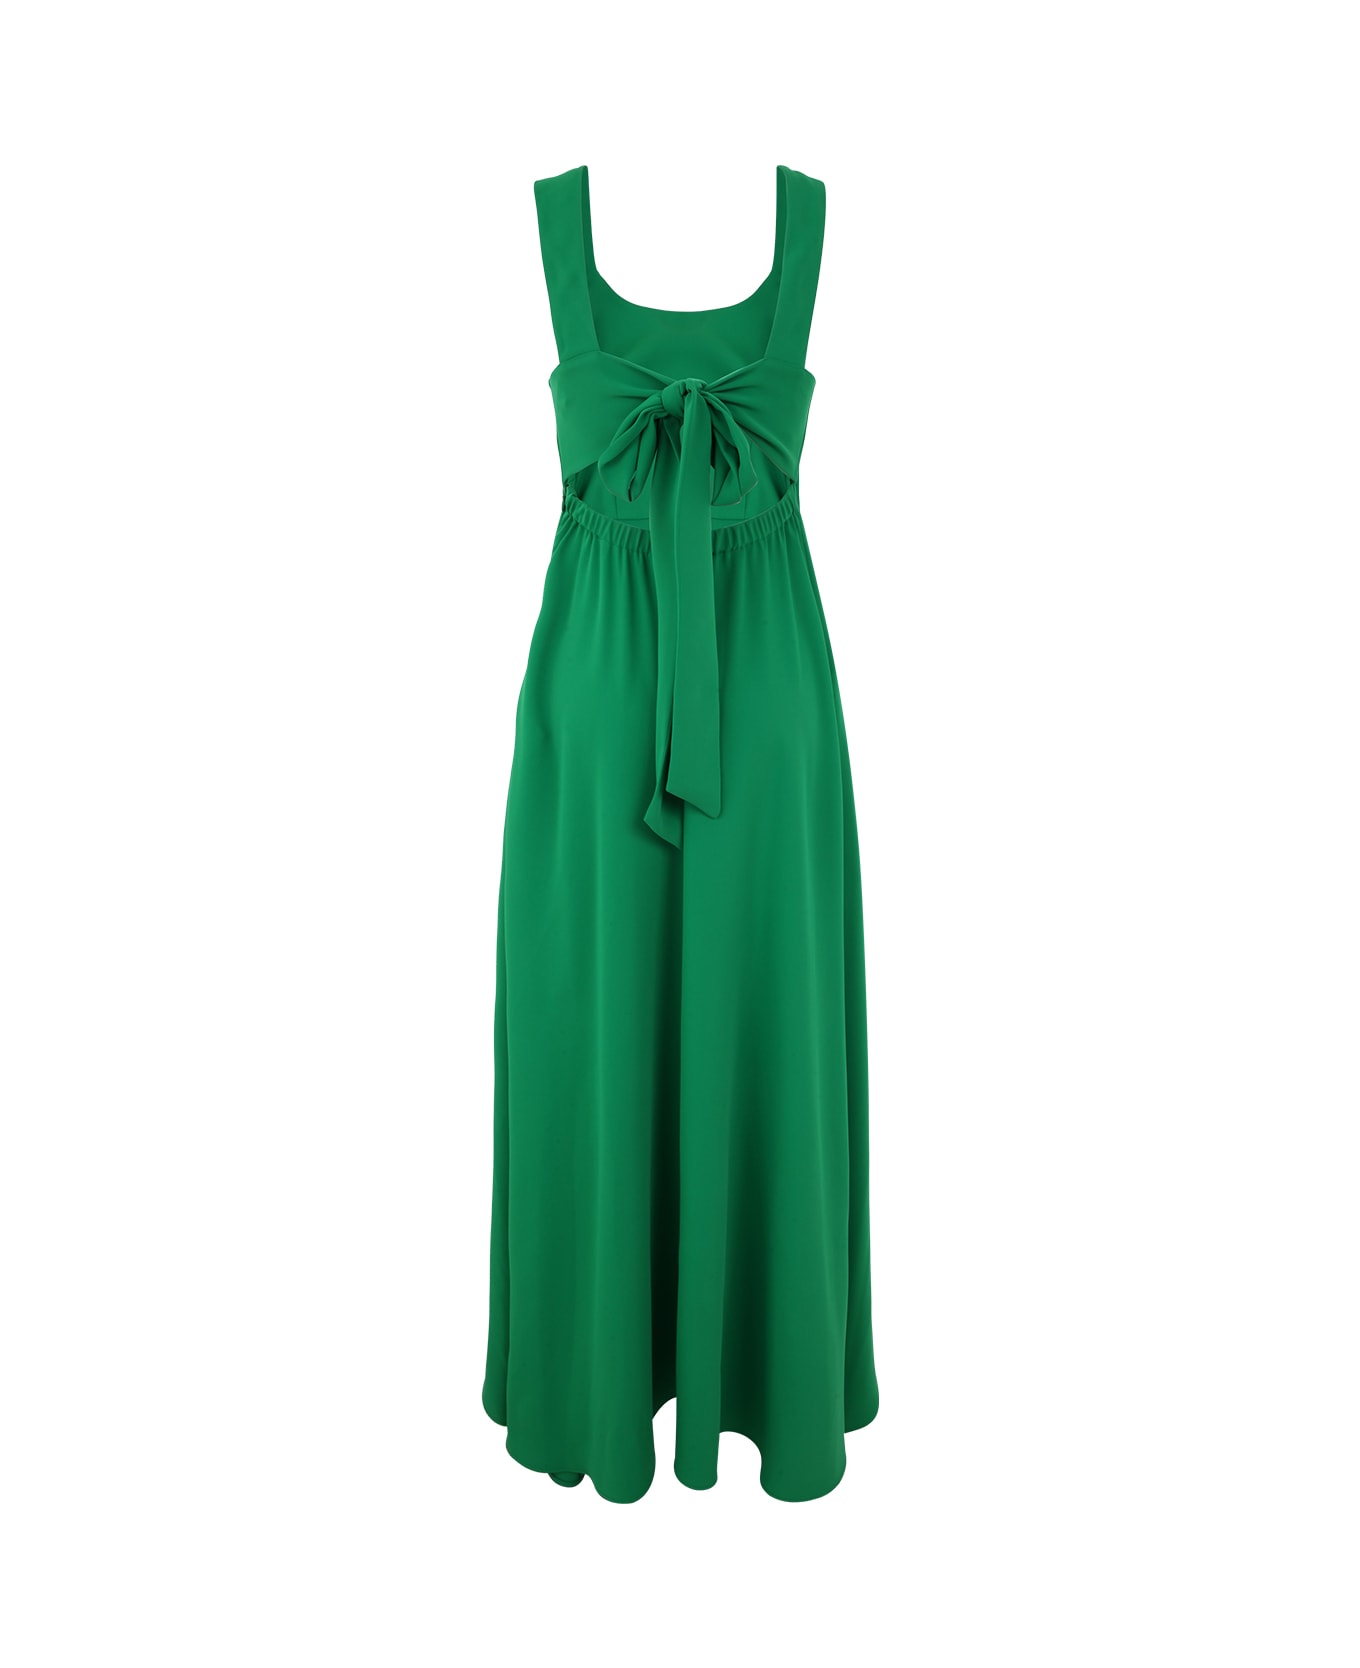 Parosh Cady Dress - Emerald Green